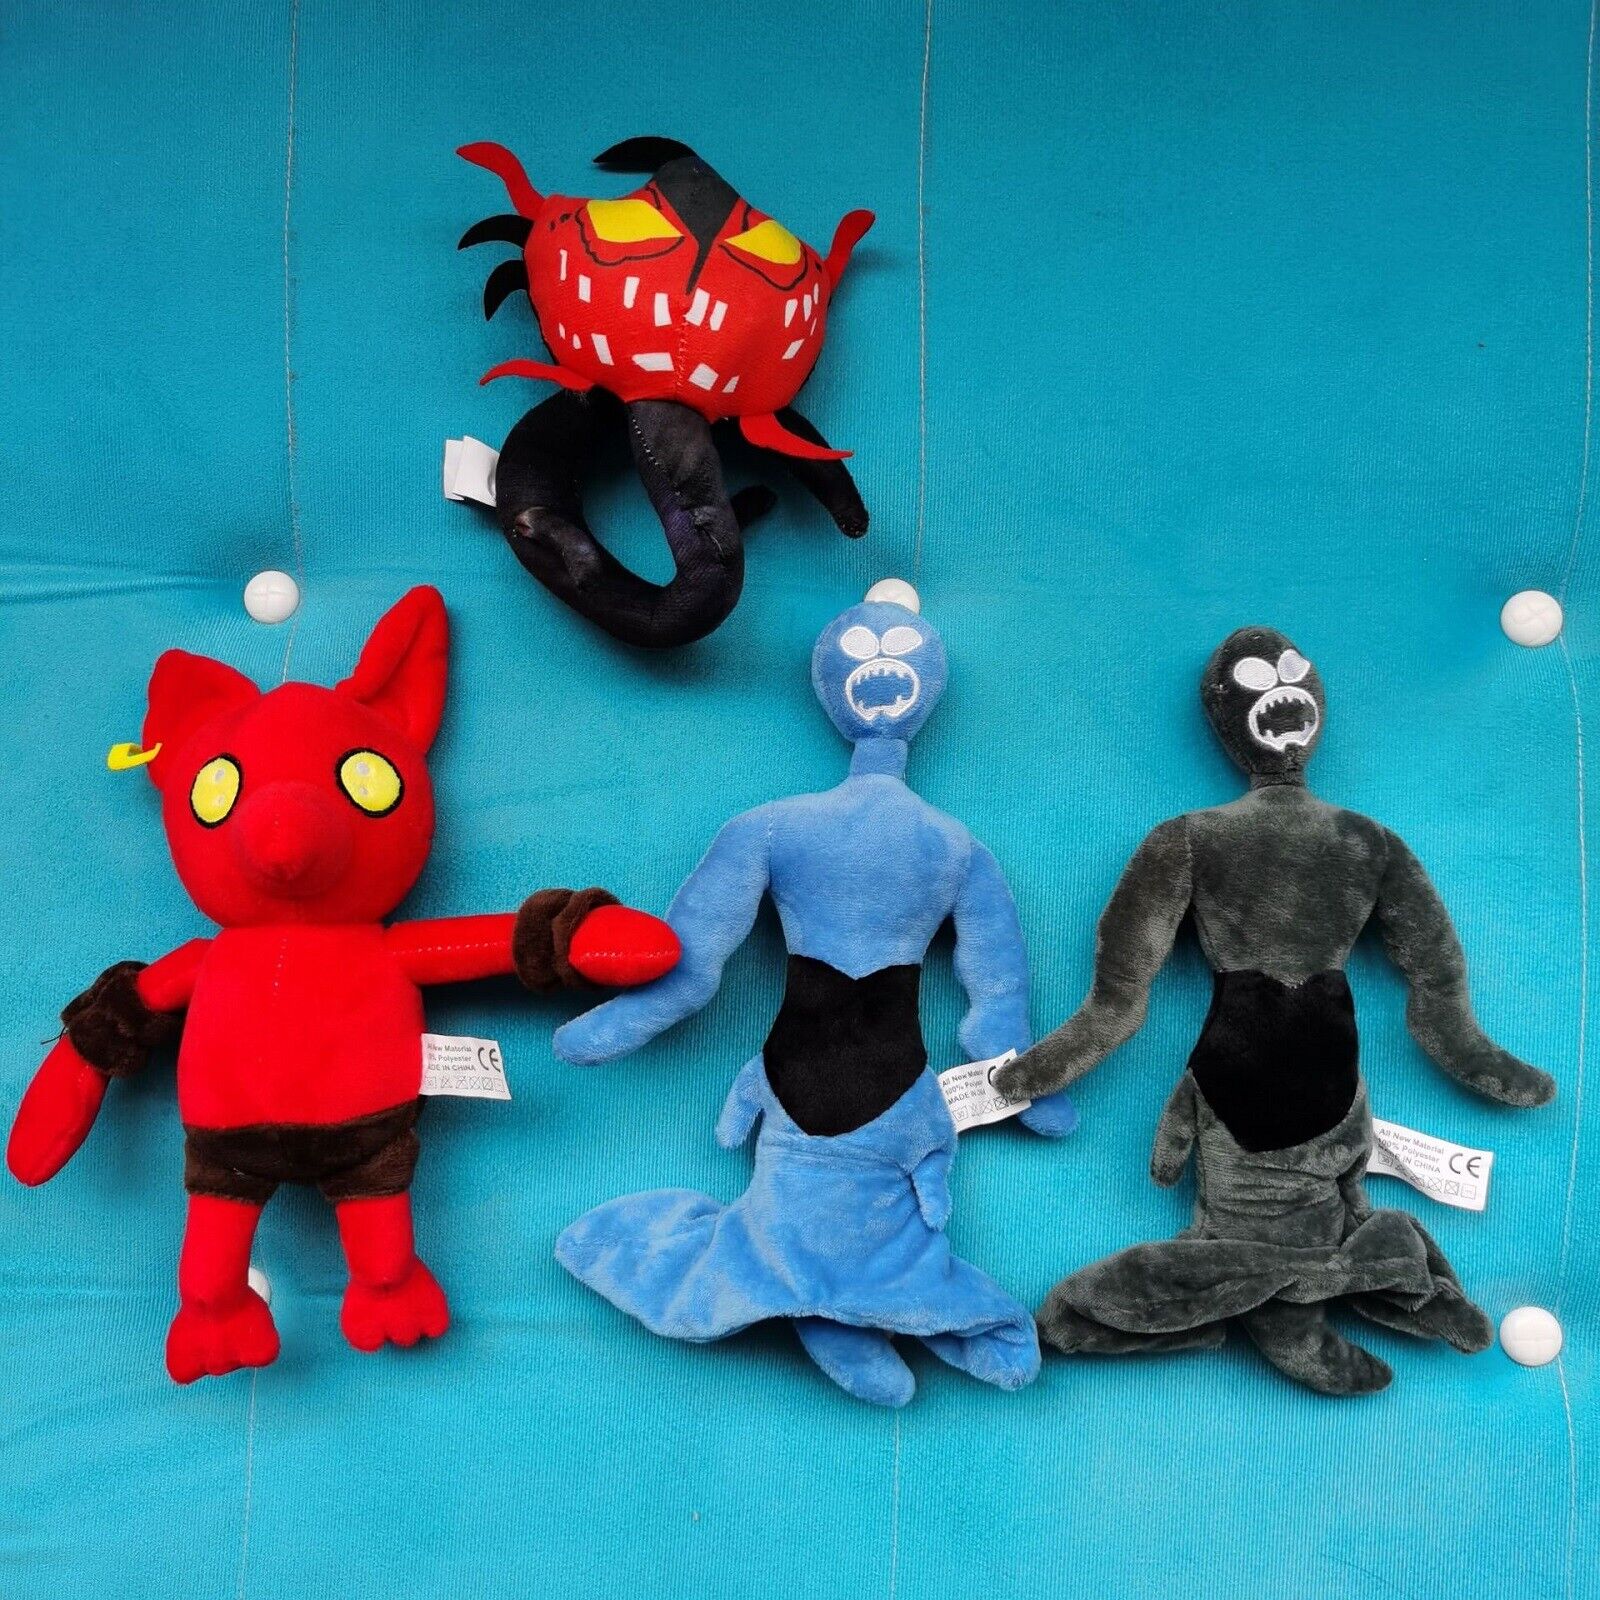 Doors Screech Plush Game Doll Green Jumbo Monster Soft Stuffed Animal  Children's Toys Gifts - AliExpress